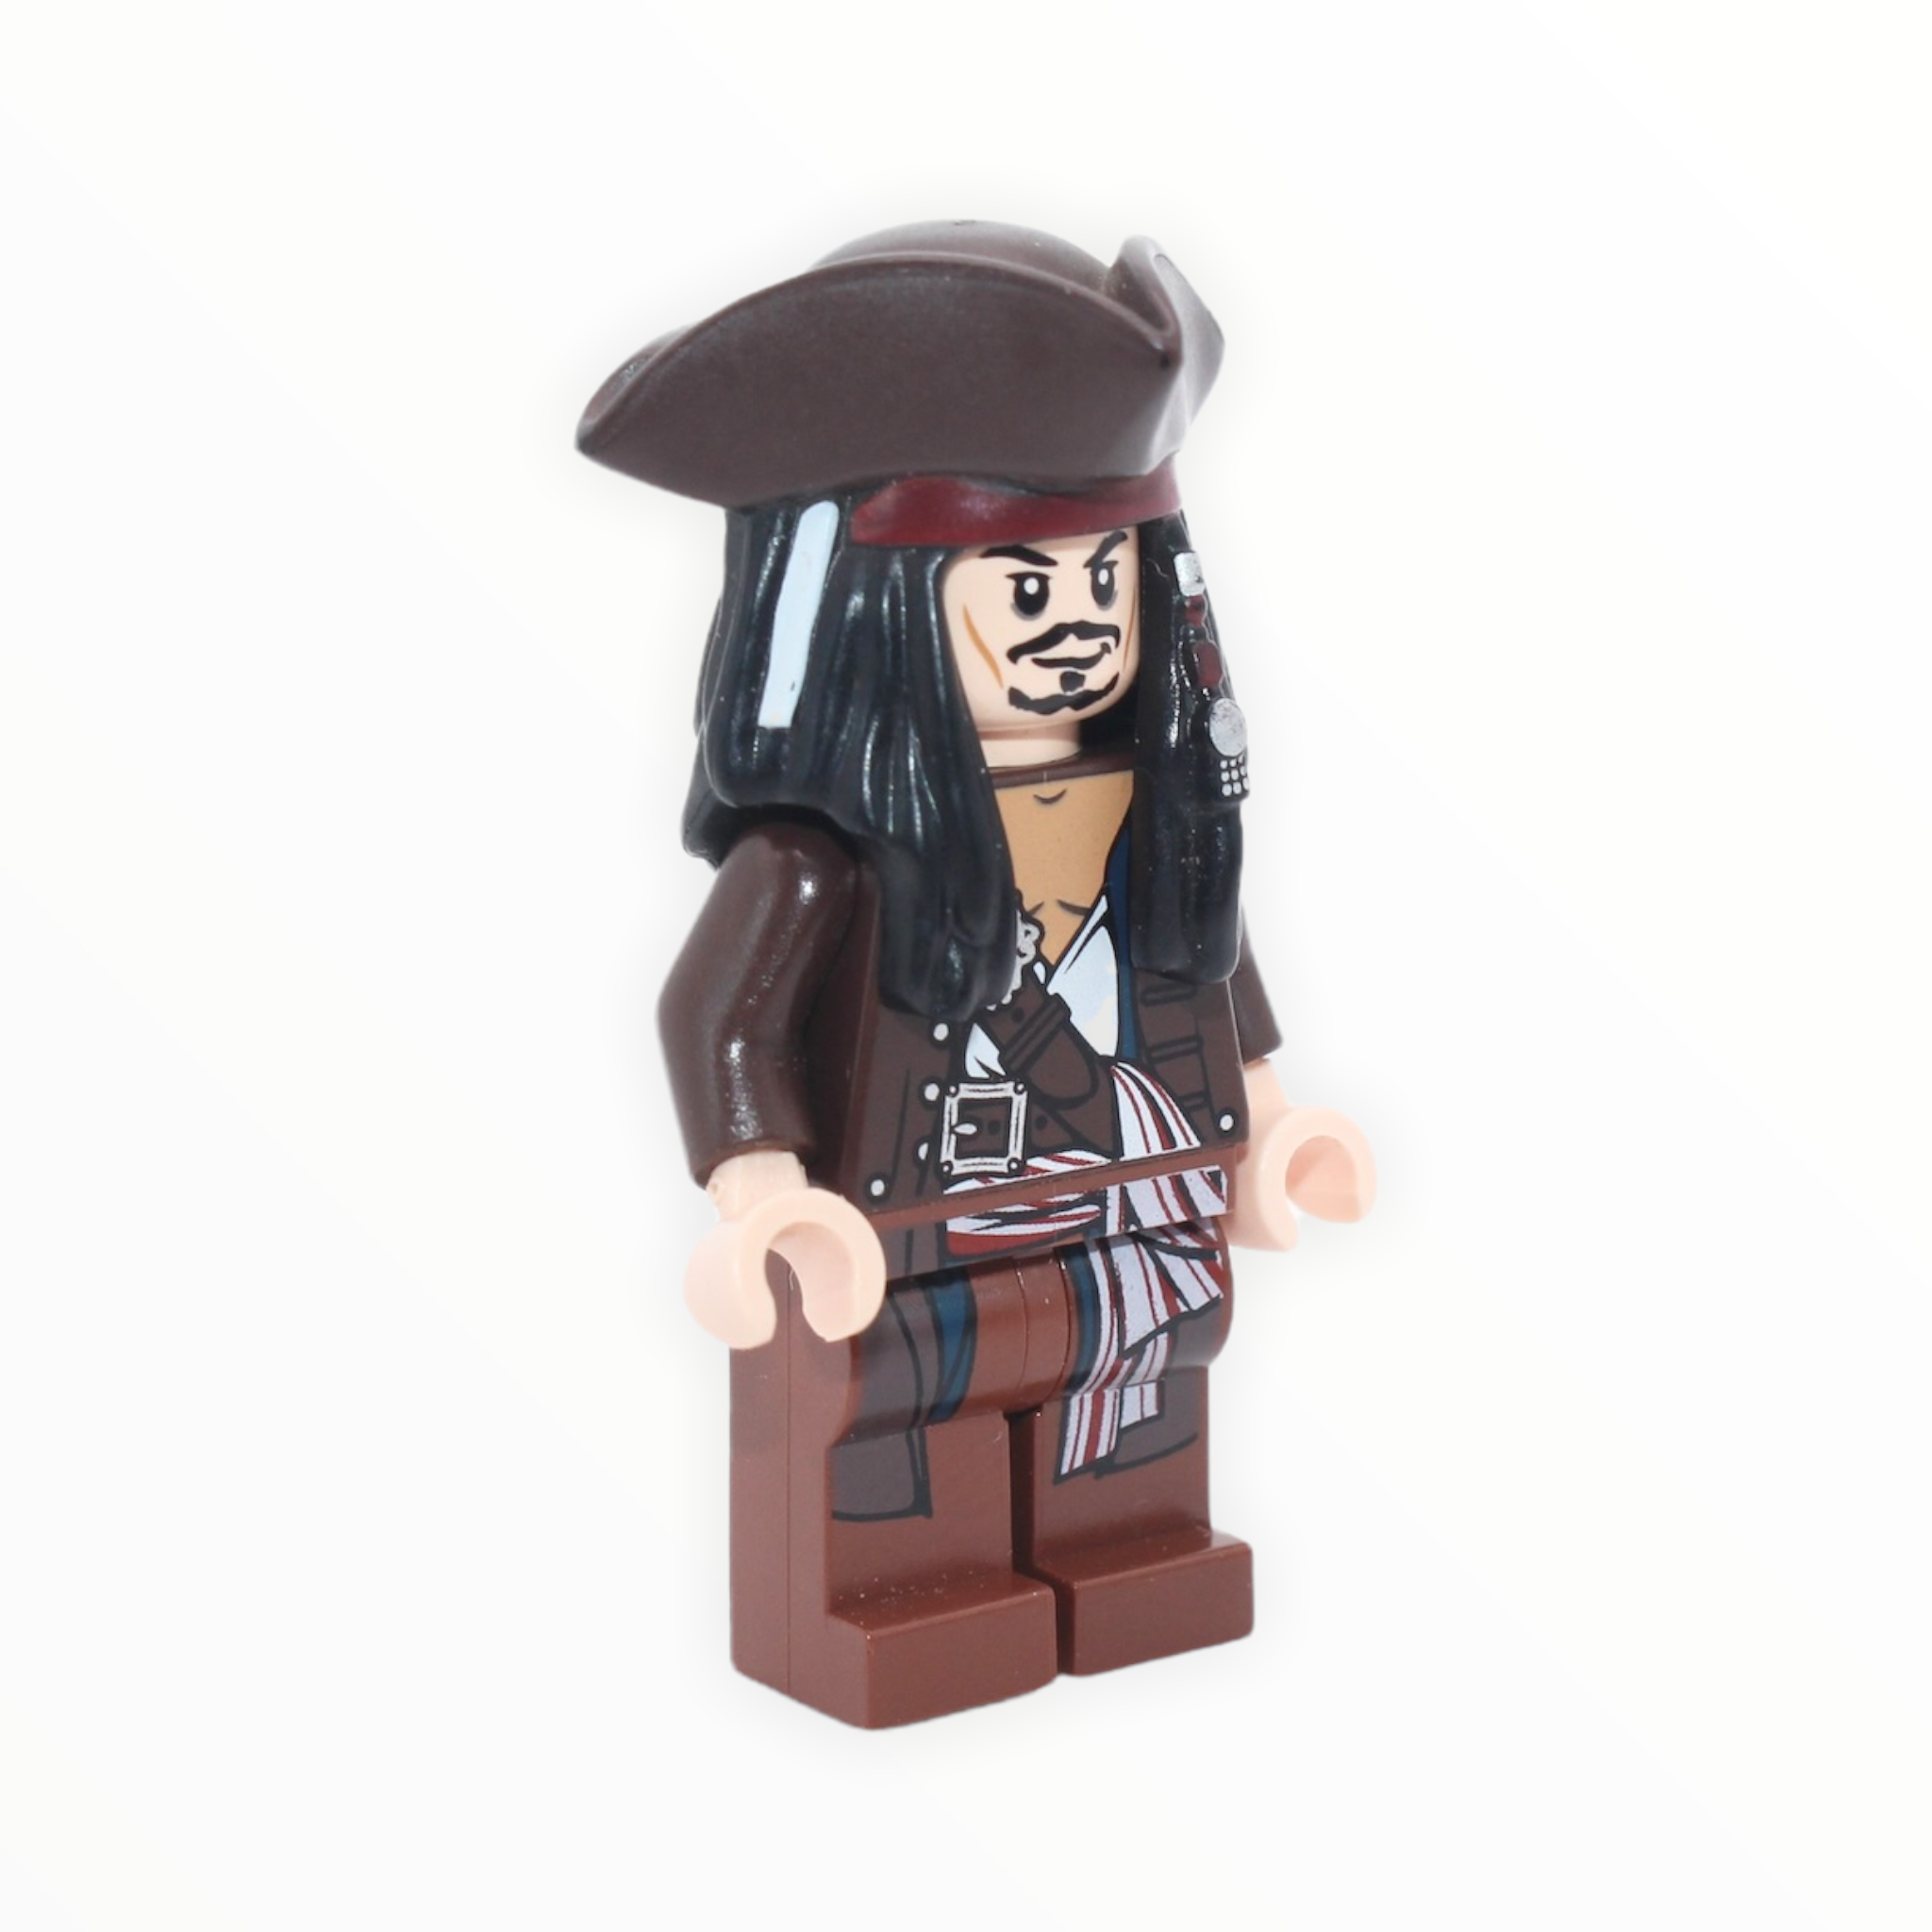 Captain Jack Sparrow (tricorne hat, dark brown coat, smile / scared)